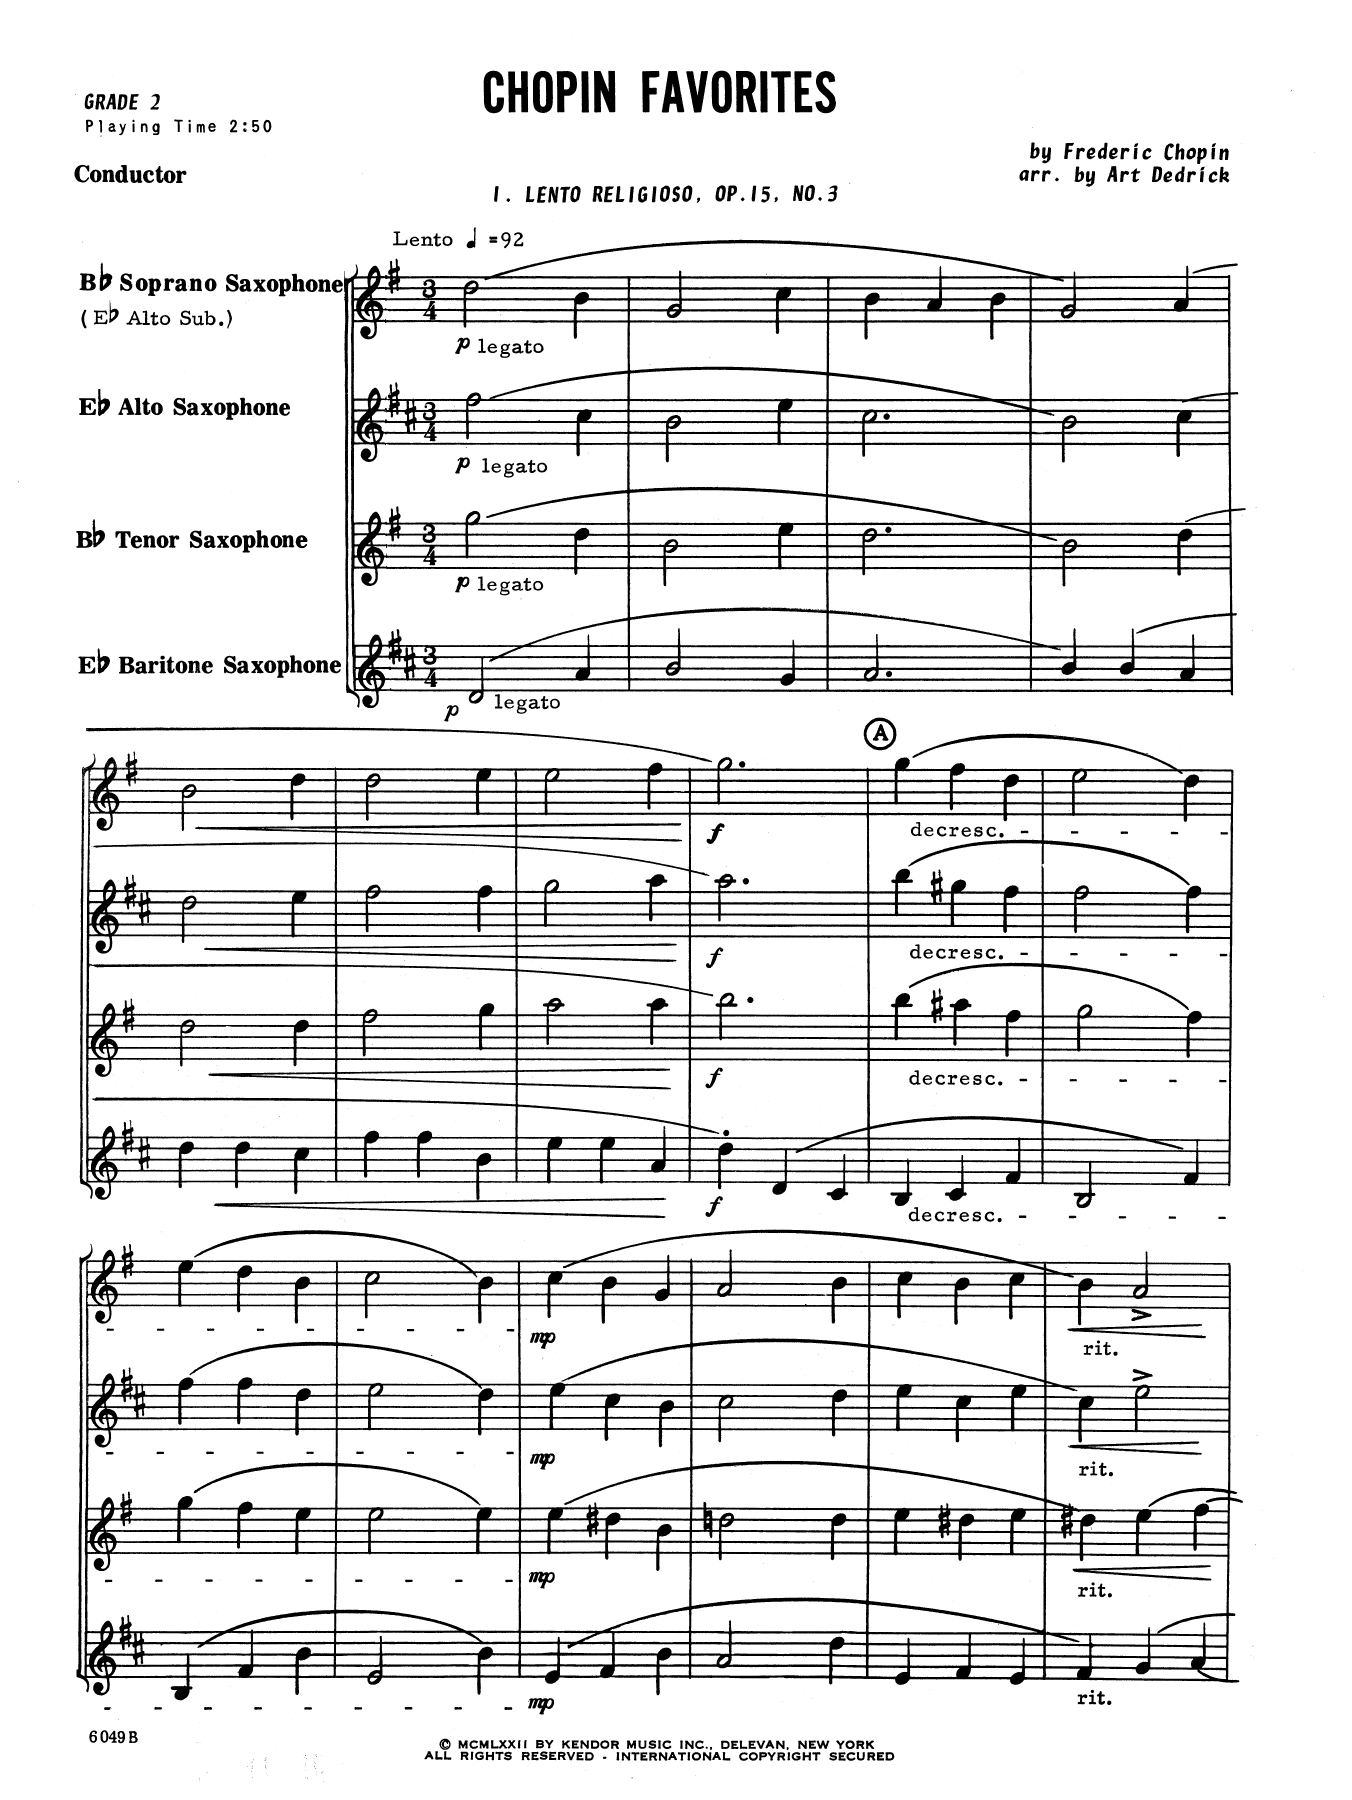 Chopin Favorites - Full Score (Woodwind Ensemble) von Art Dedrick